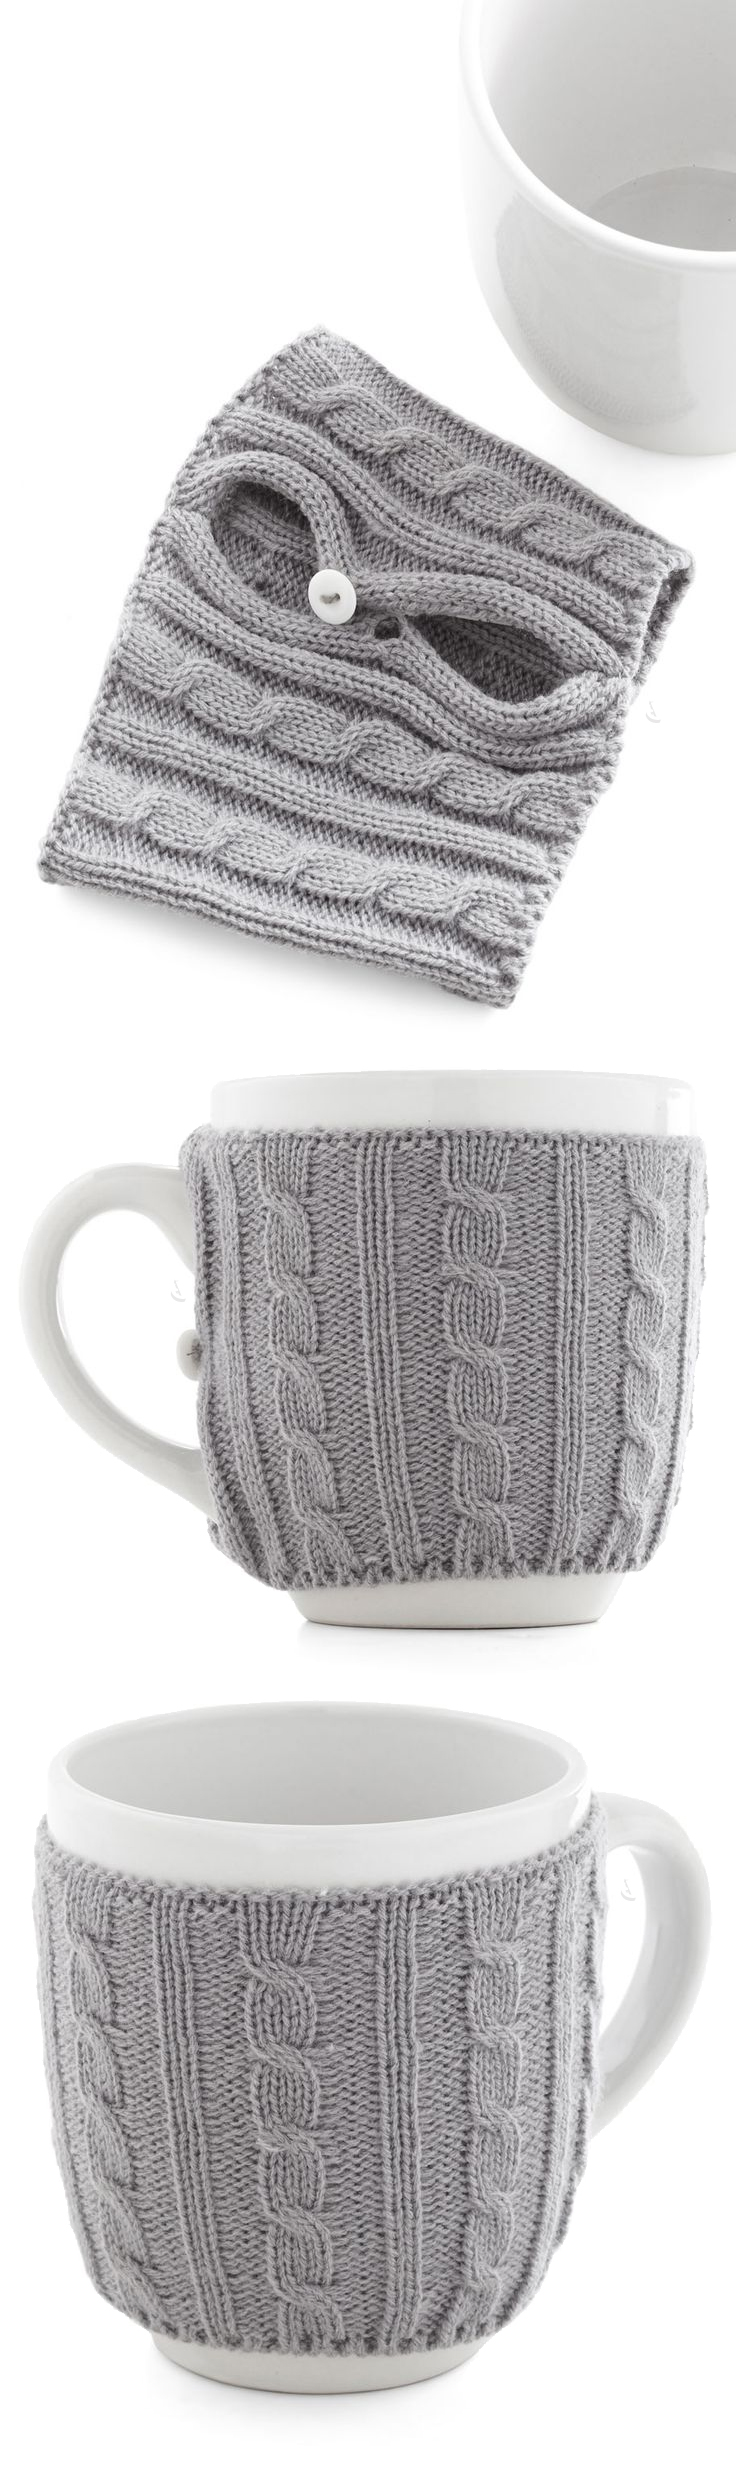 Snug mug - a coffee cup with a sweater! Keeps your tea warm #product_design